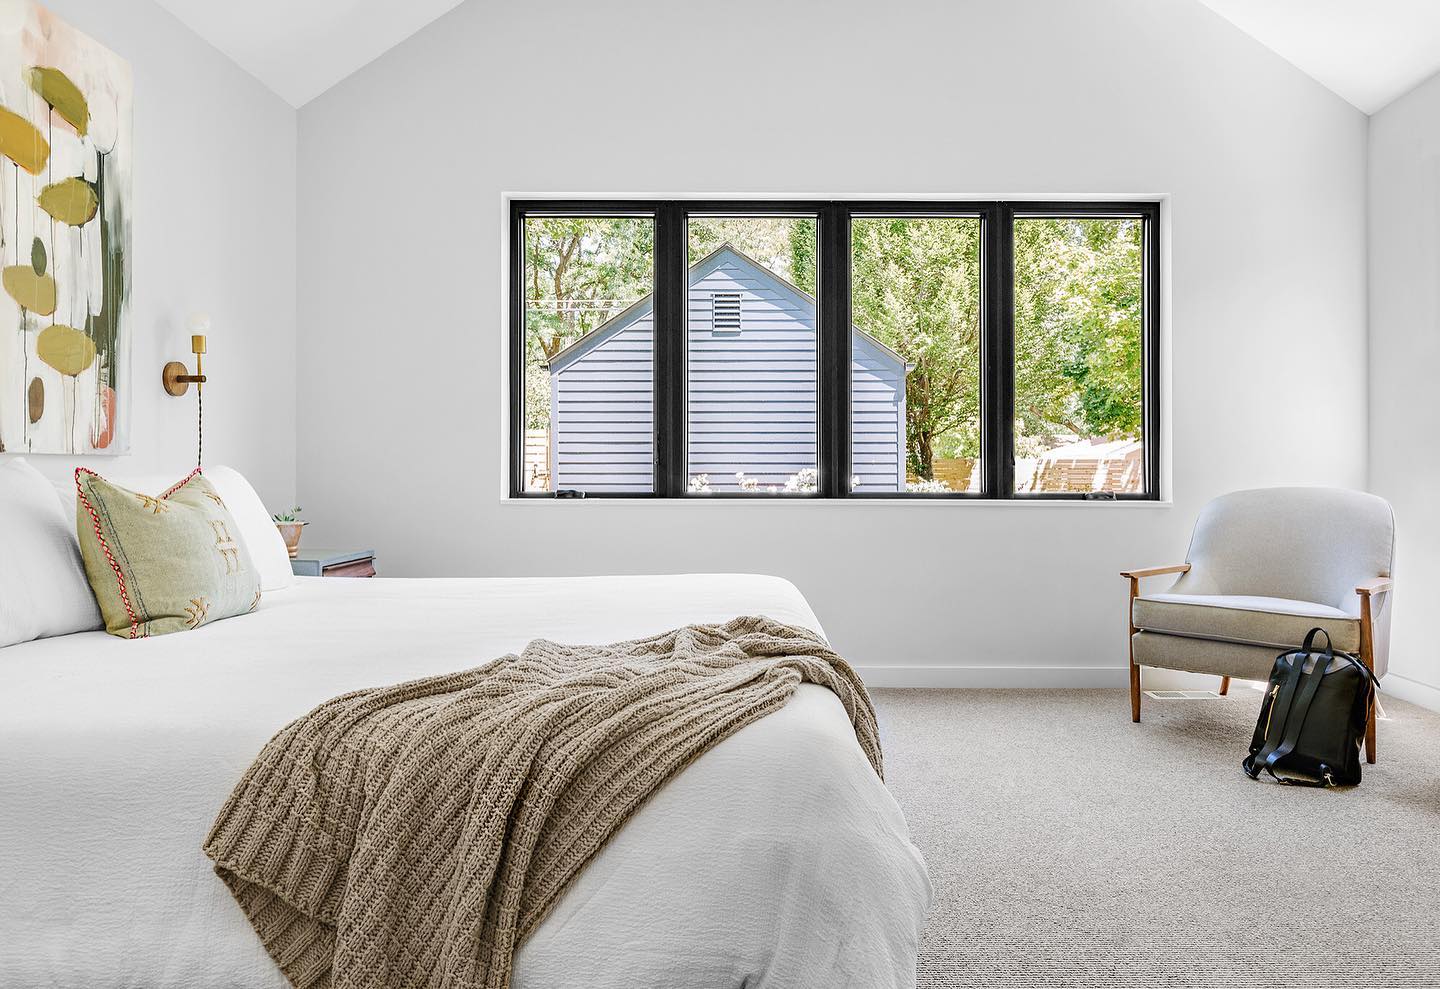 Bedroom windows with black trim